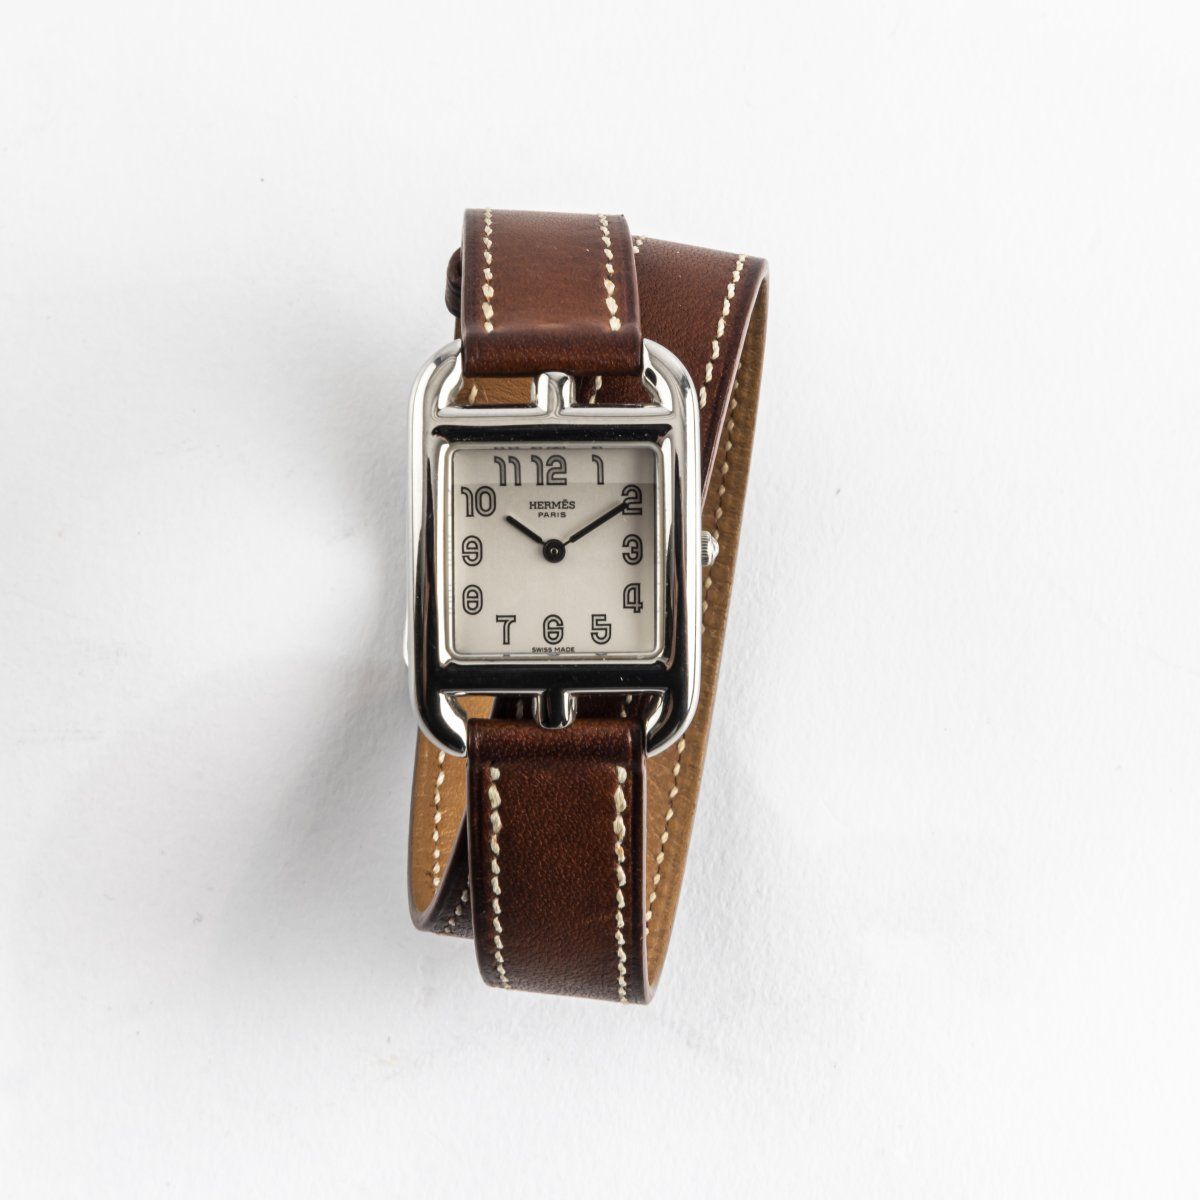 Null Hermès，巴黎，Cape Cod腕表，2002年，不锈钢，镀银乳白色表盘，棕色皮革制成的双表带。重26.72克。表壳尺寸为23 x 23毫米。

&hellip;